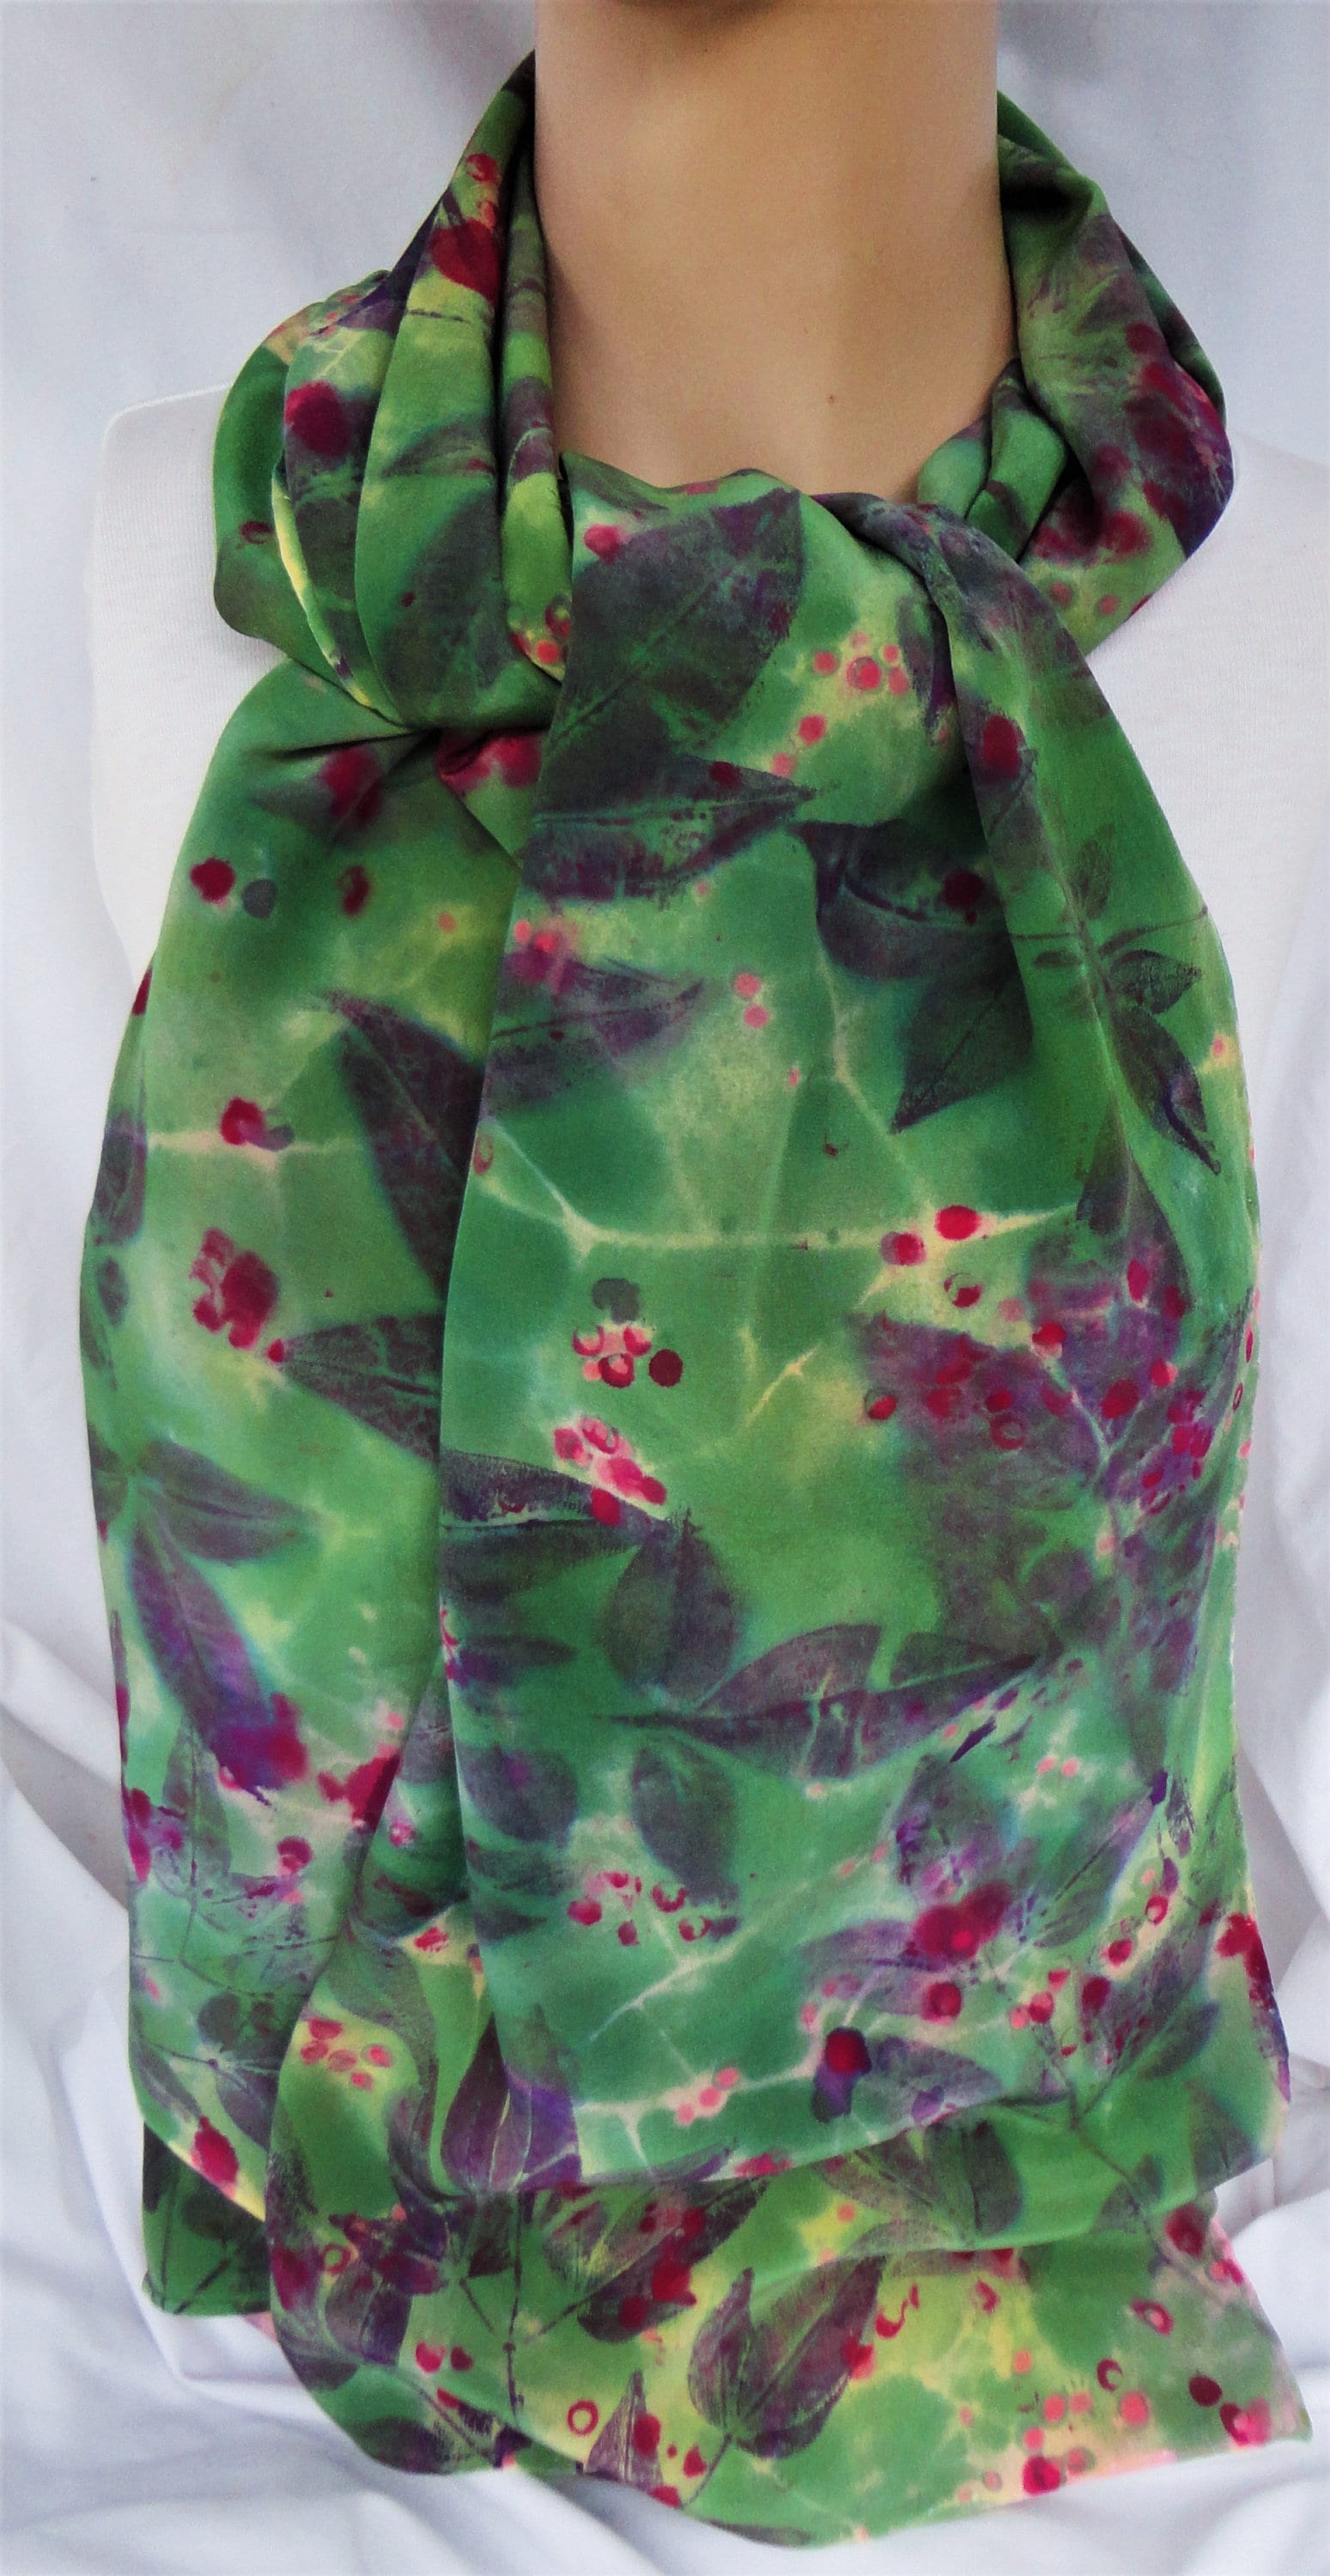 silk scarf long large crepe Nandina berries hand painted green red wearable art women